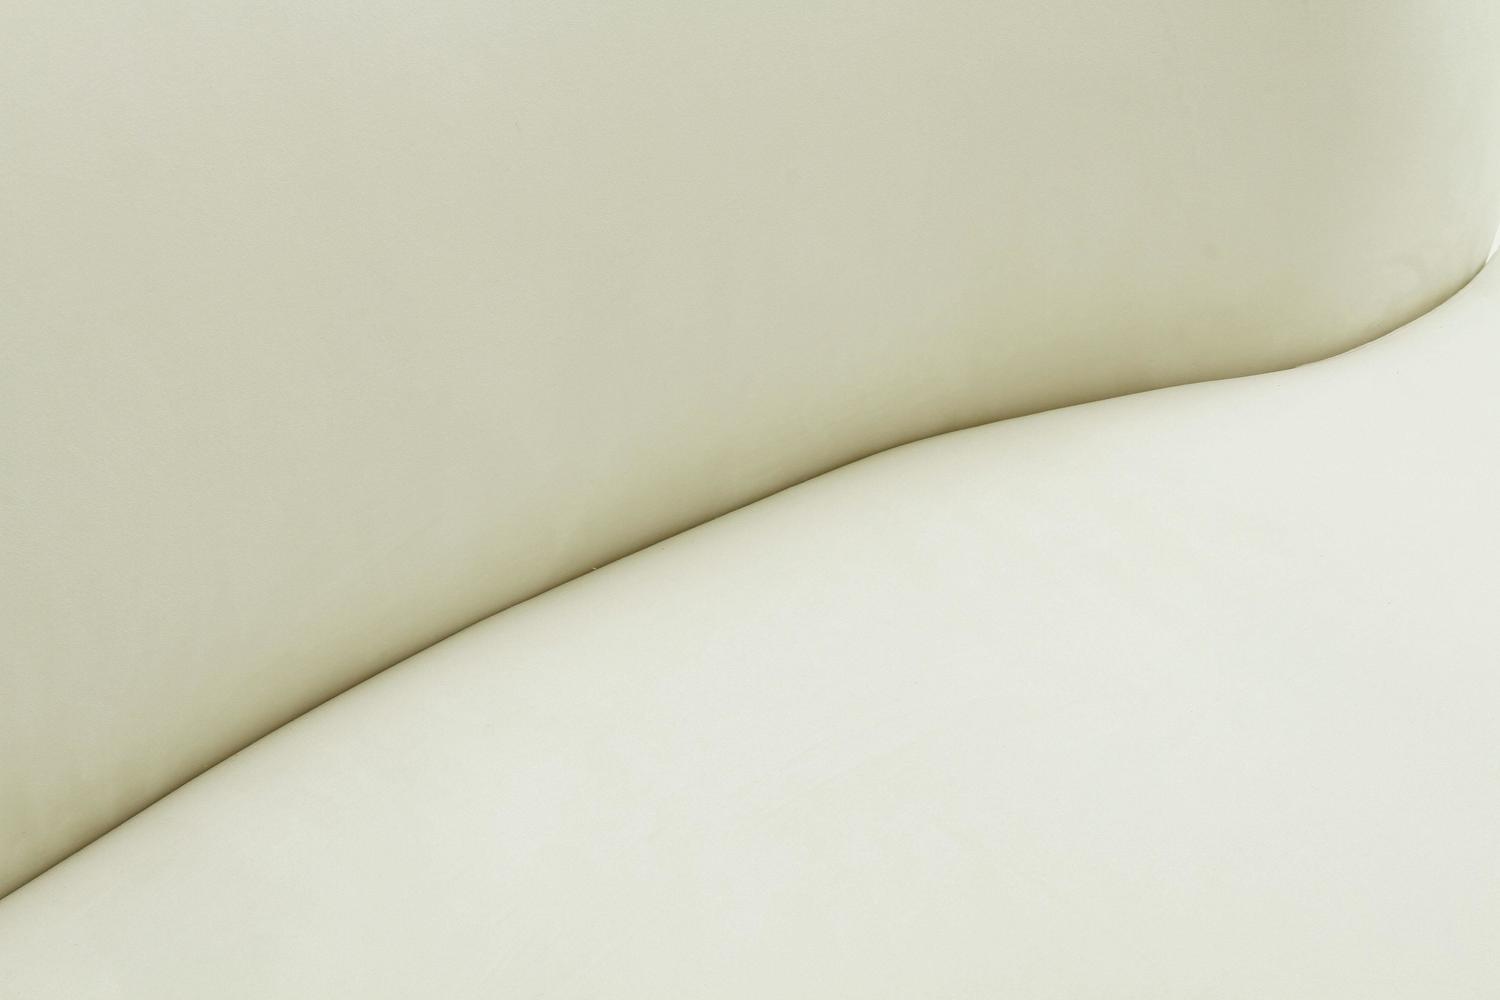 blue velour sectional Contemporary Design Furniture Sofas Cream